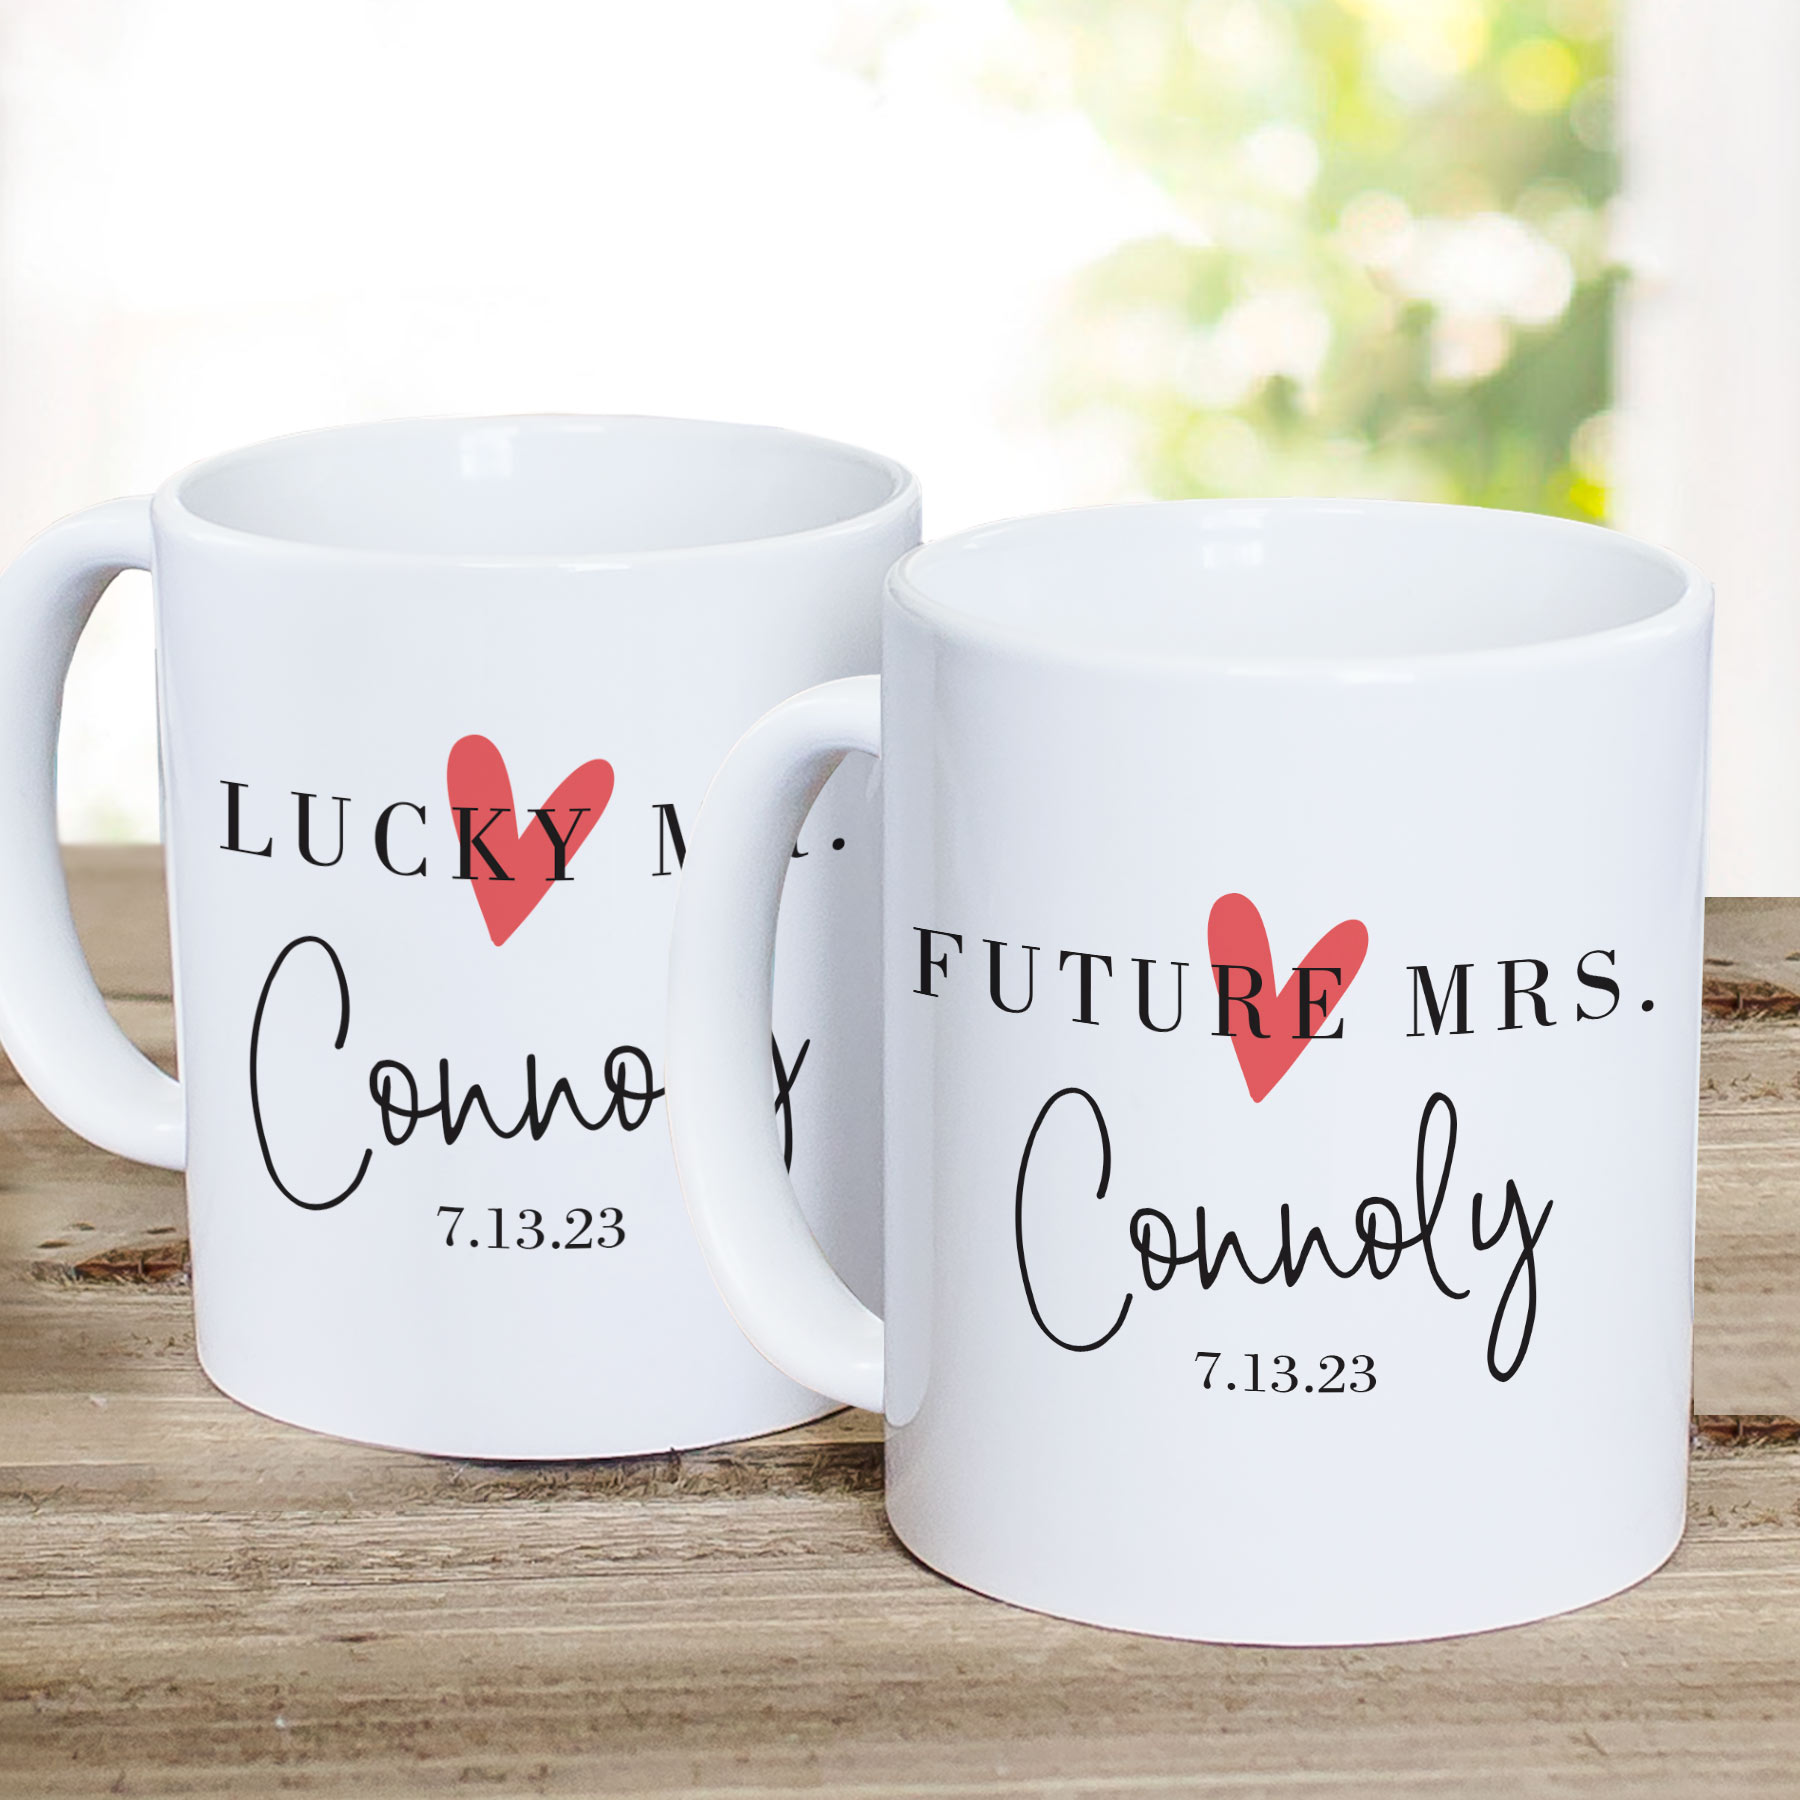 Personalized Wedding Mugs - Set of 2 20000x2